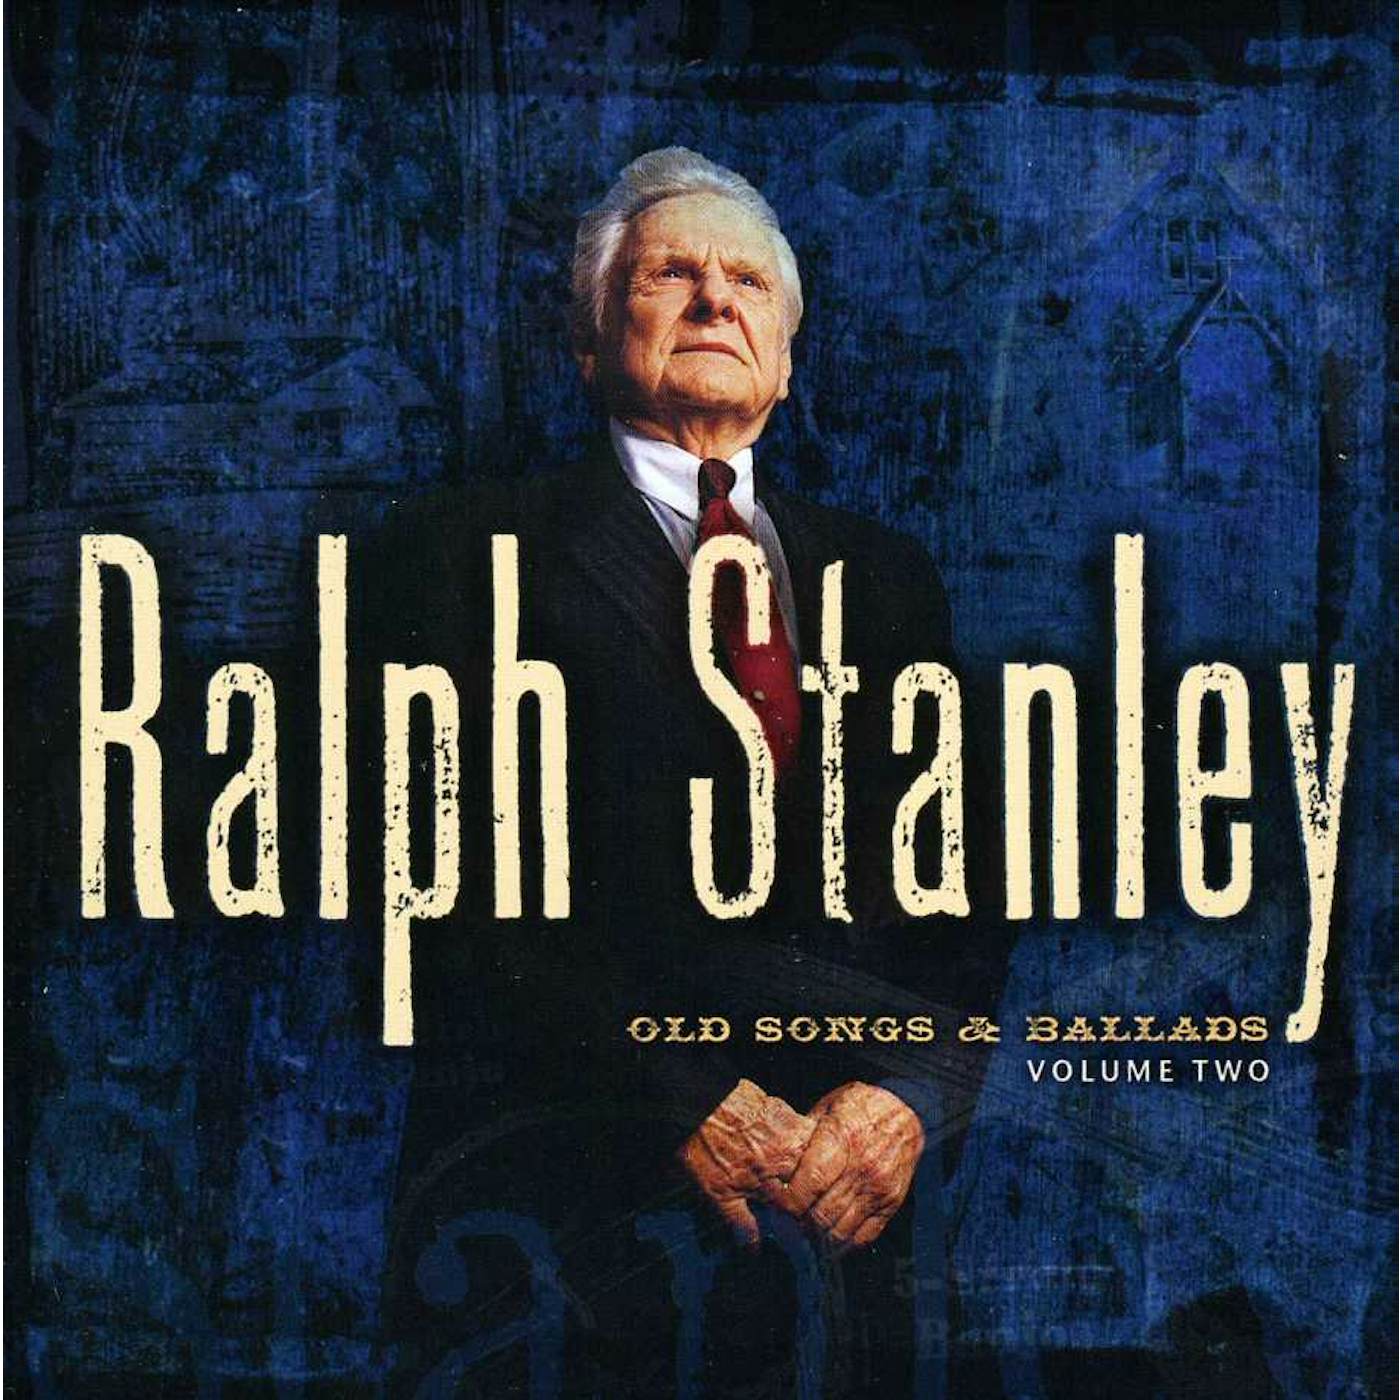 Ralph Stanley OLD SONGS & BALLADS 2 CD